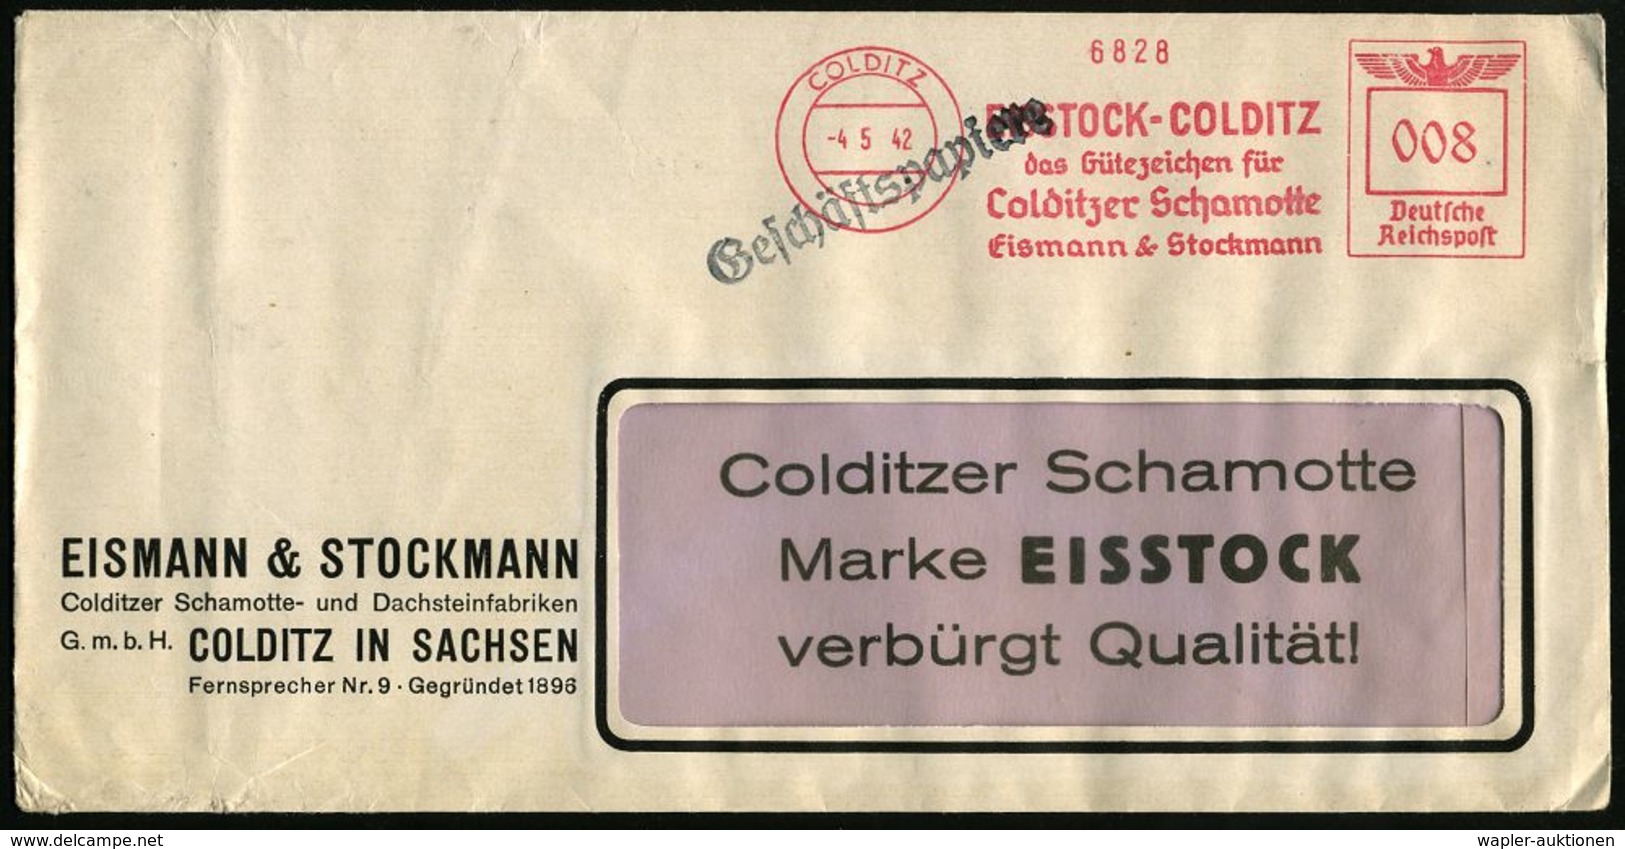 KLIMATECHNIK ( WÄRME- & KÄLTE) : COLDITZ/ EISSTOCK-COLDITZ/ ..Colditzer Schamotte/ Eismann & Stockmann 1942 (4.5.) AFS A - Unclassified